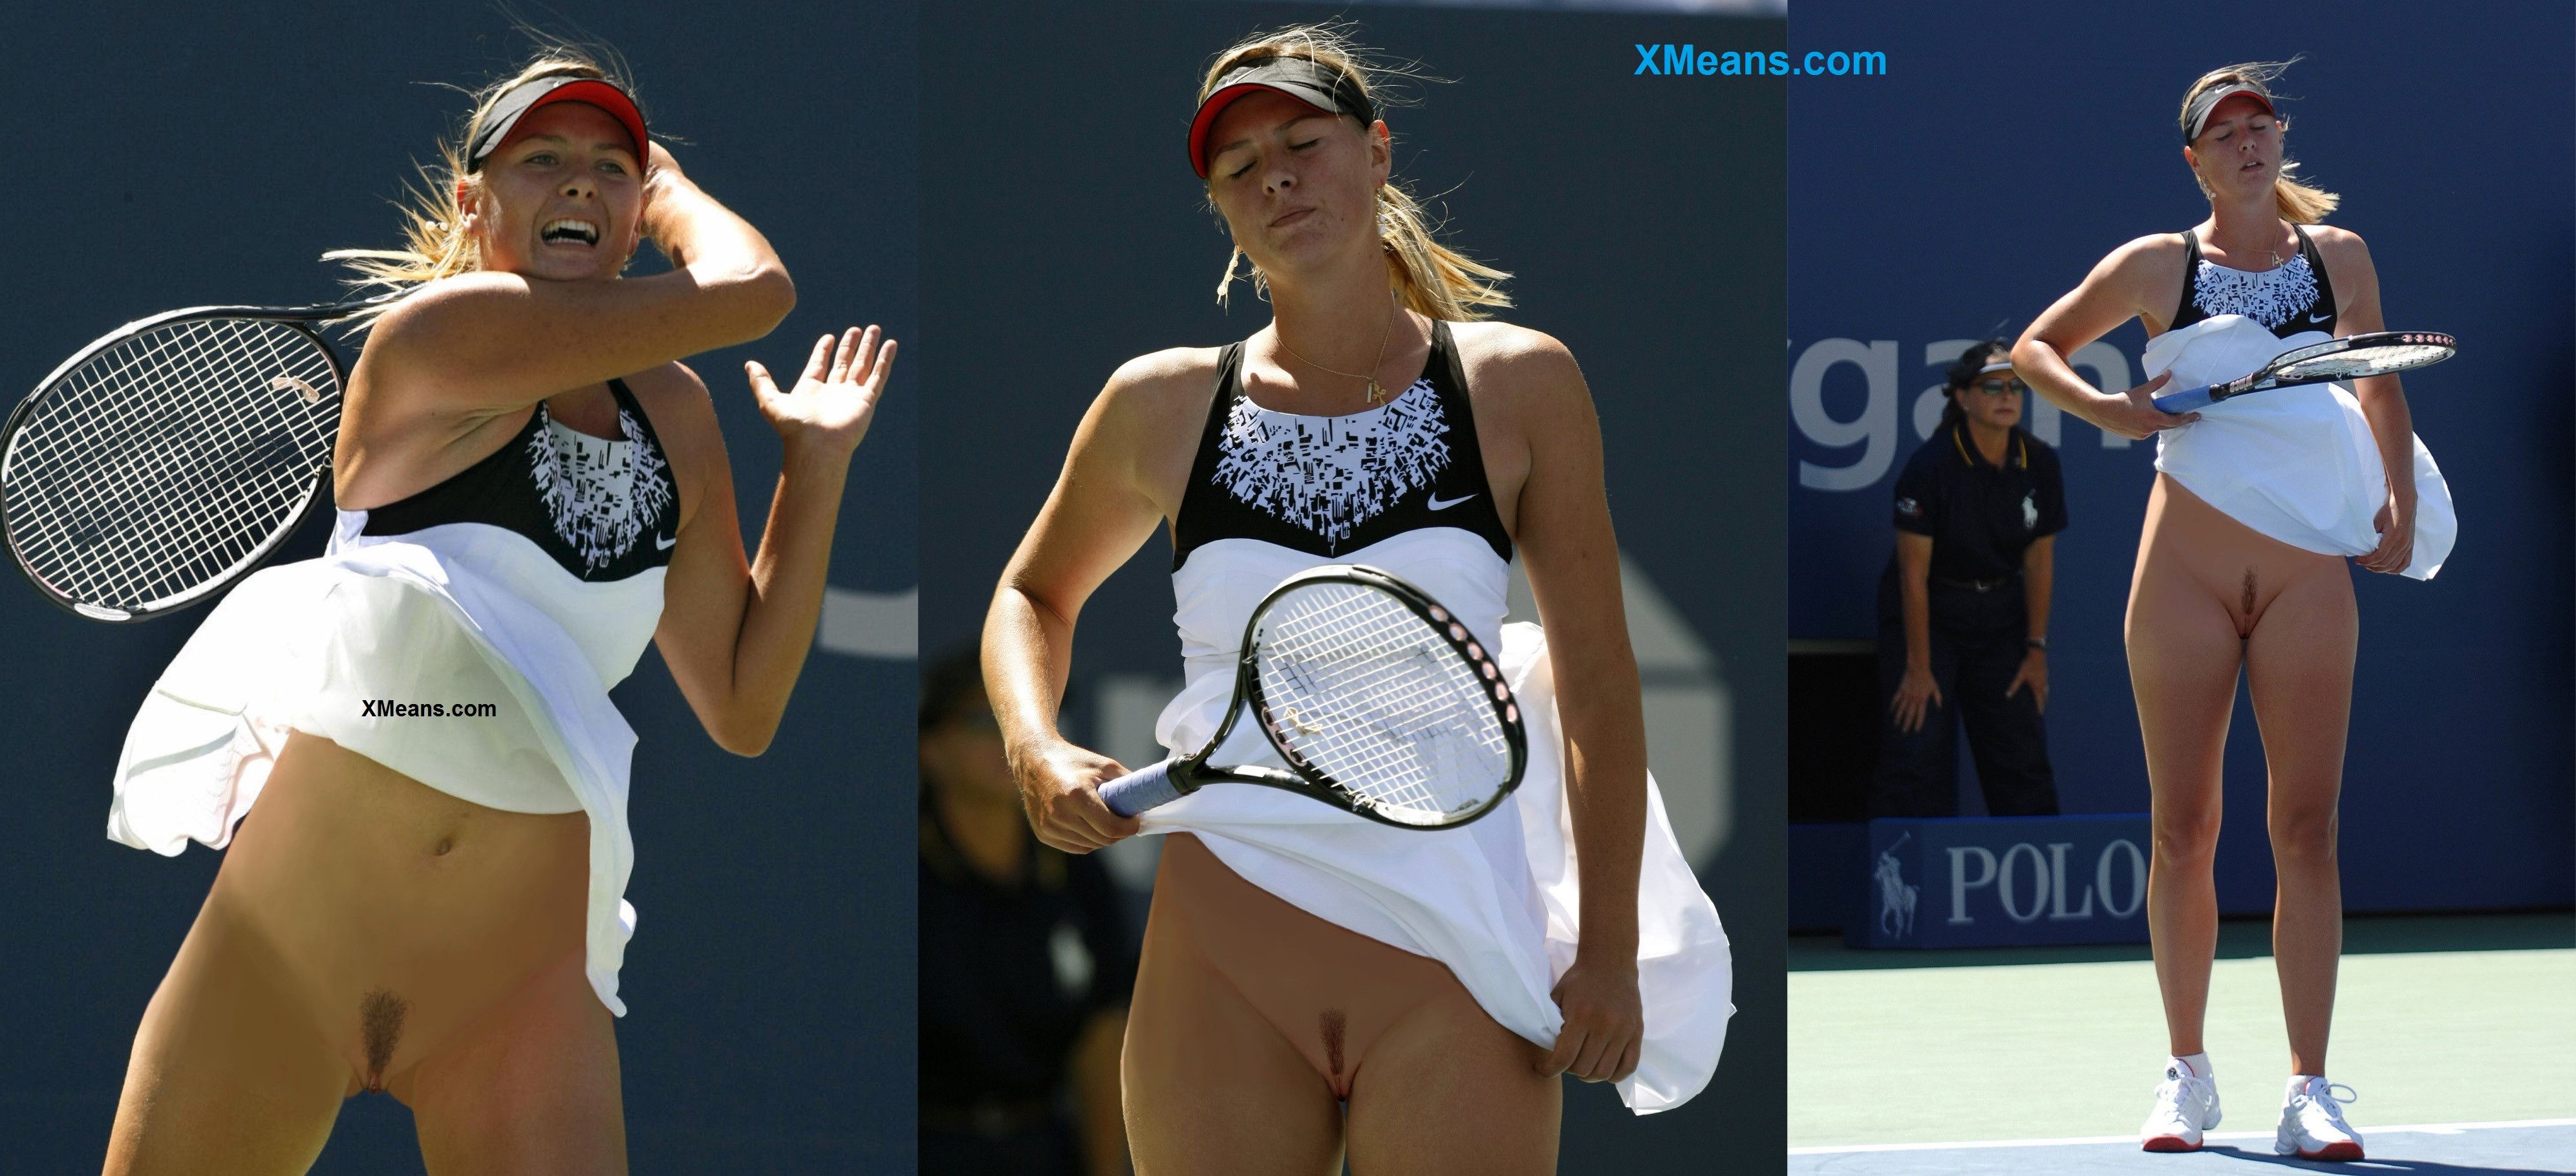 Hot nude tennis stars